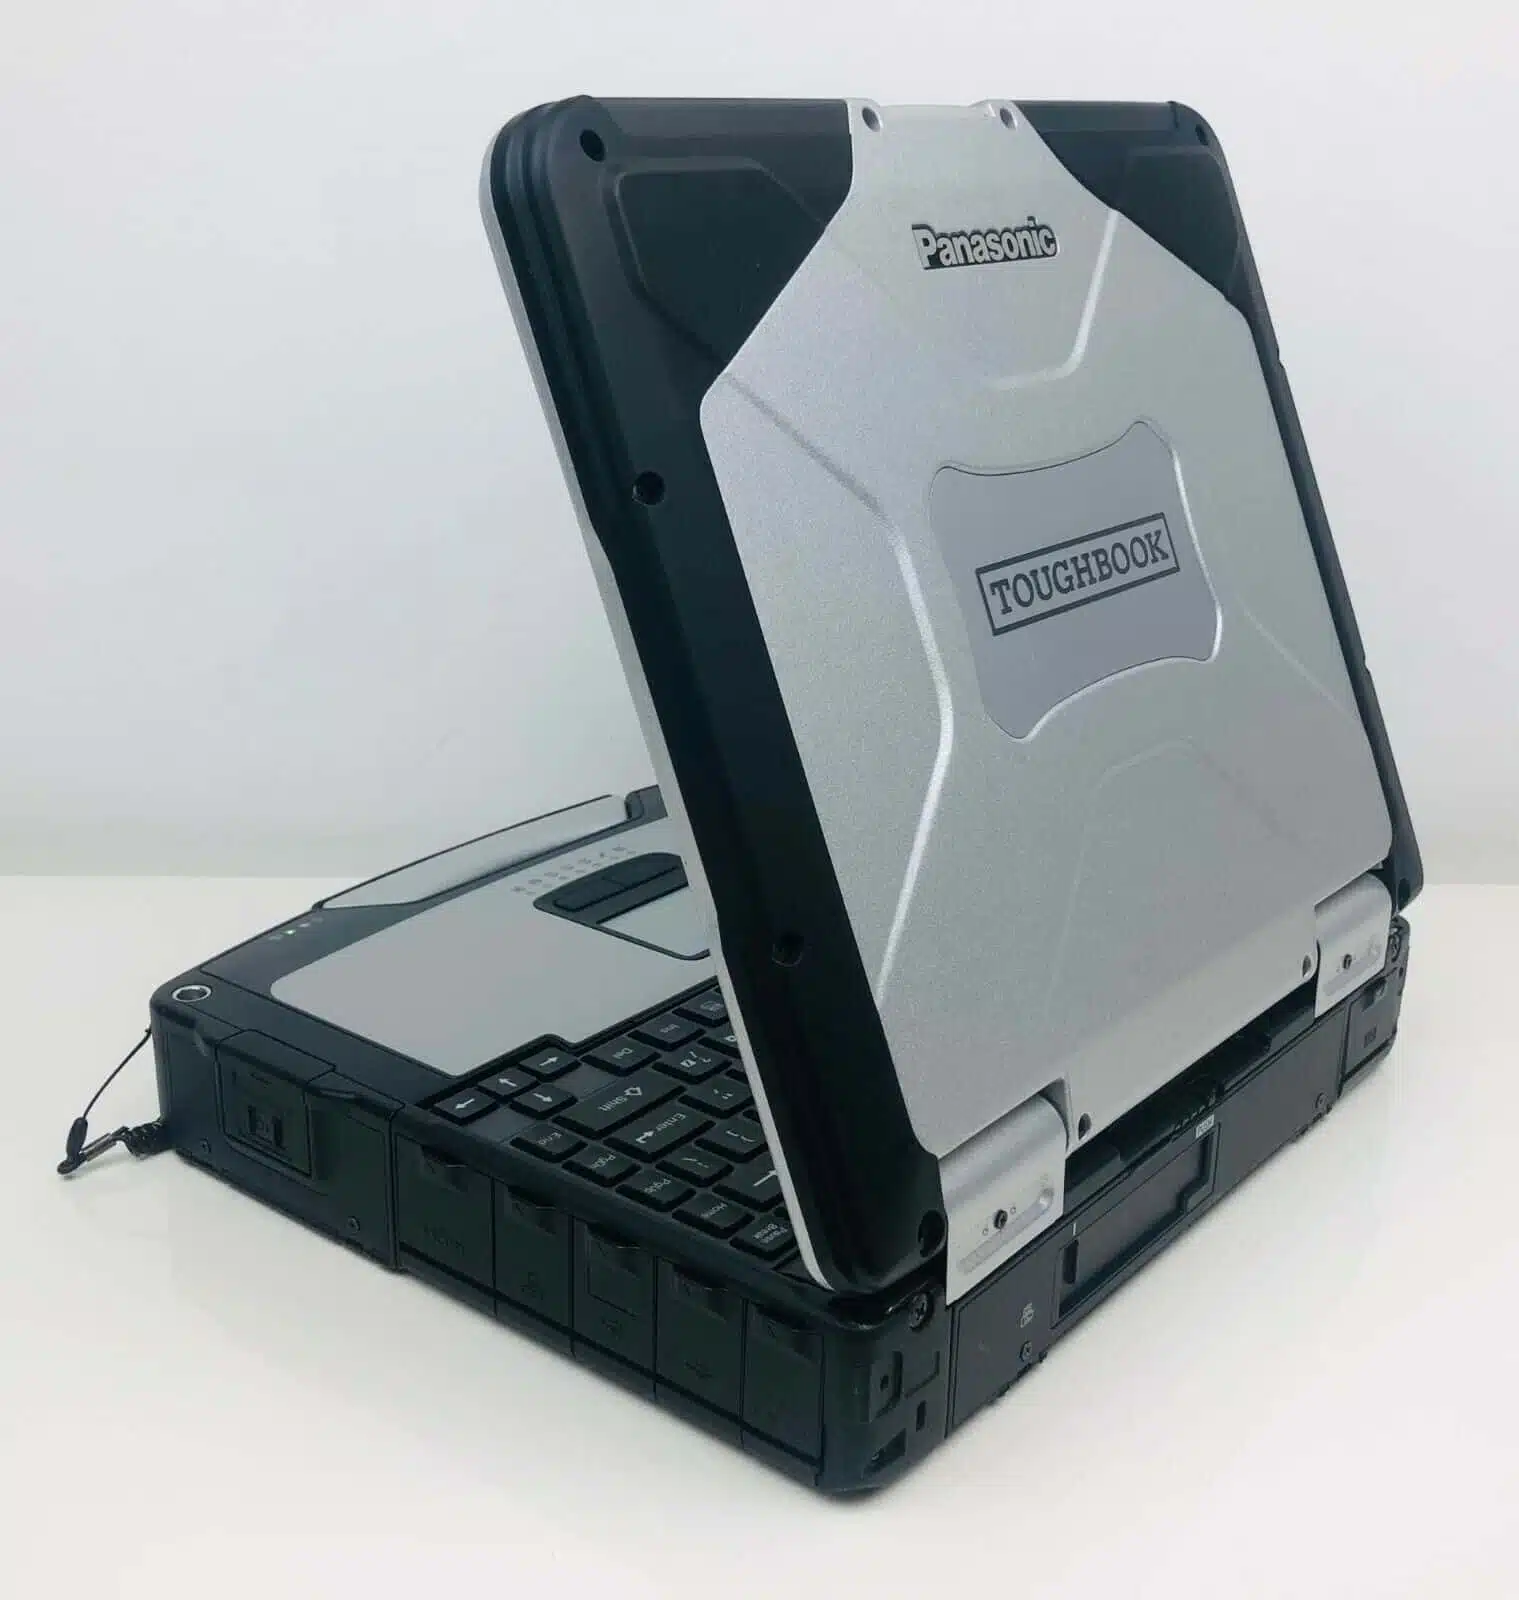 Panasonic Toughbook mk4 core i5 - Grado Militar